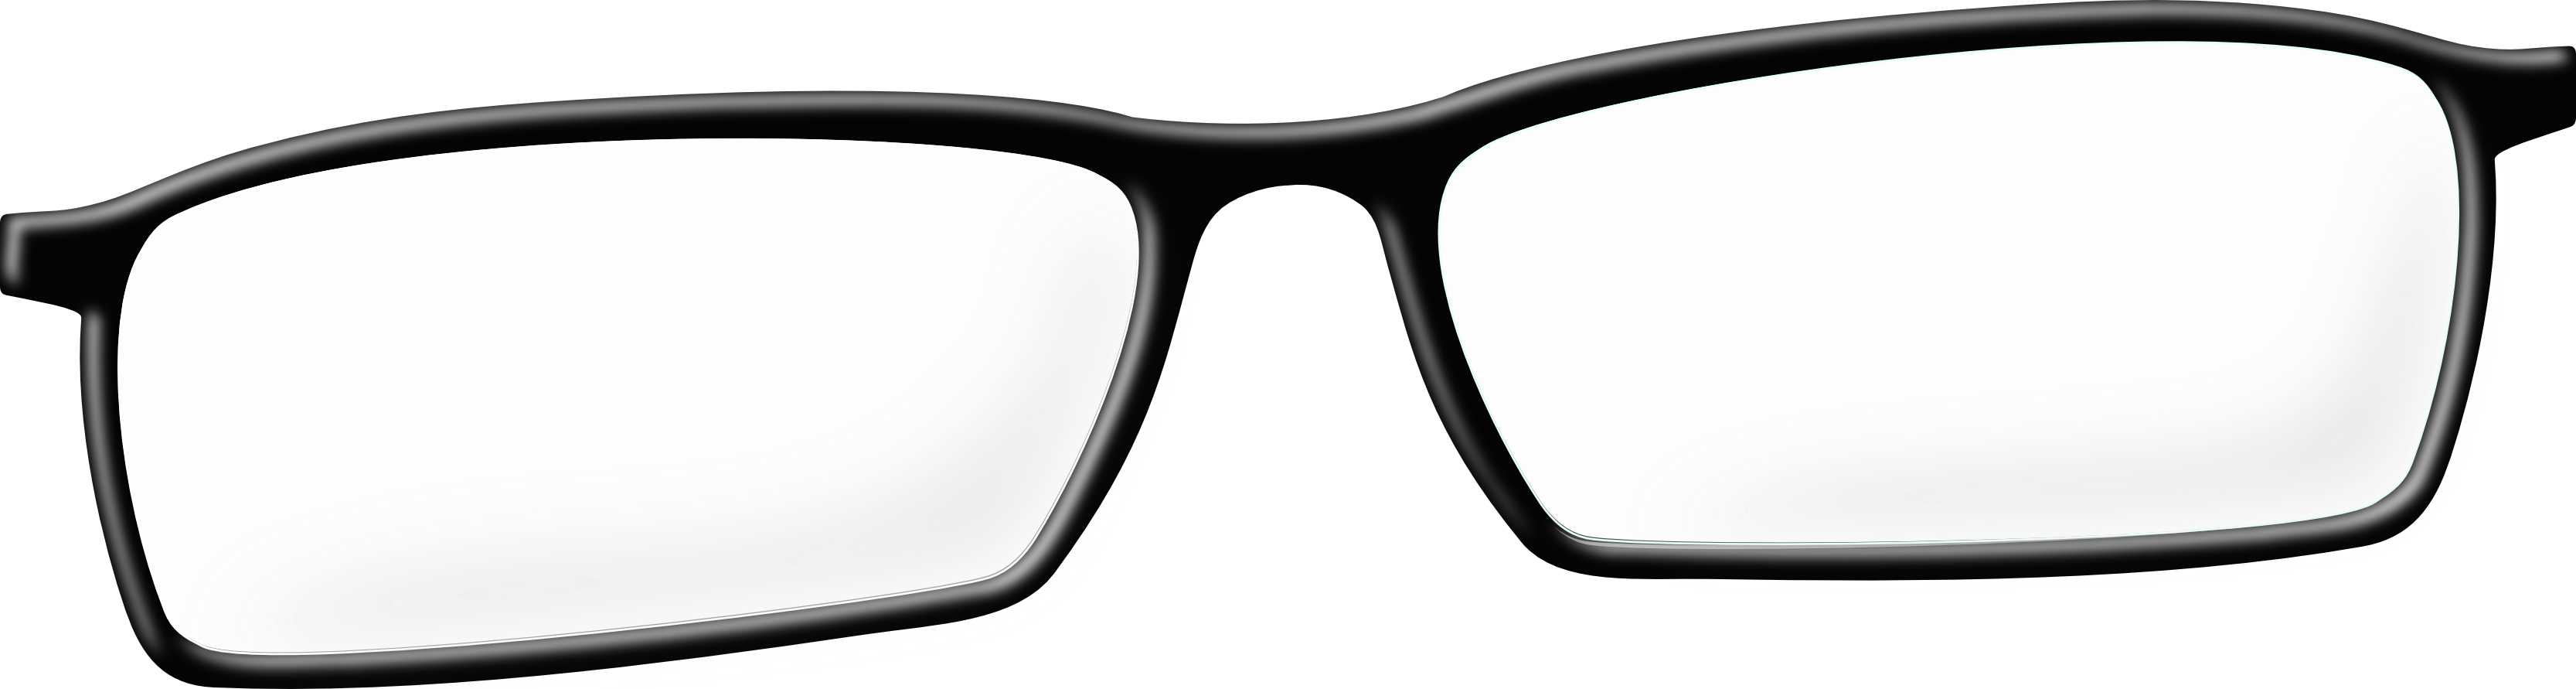 Glasses Png Image - Glasses, Transparent background PNG HD thumbnail